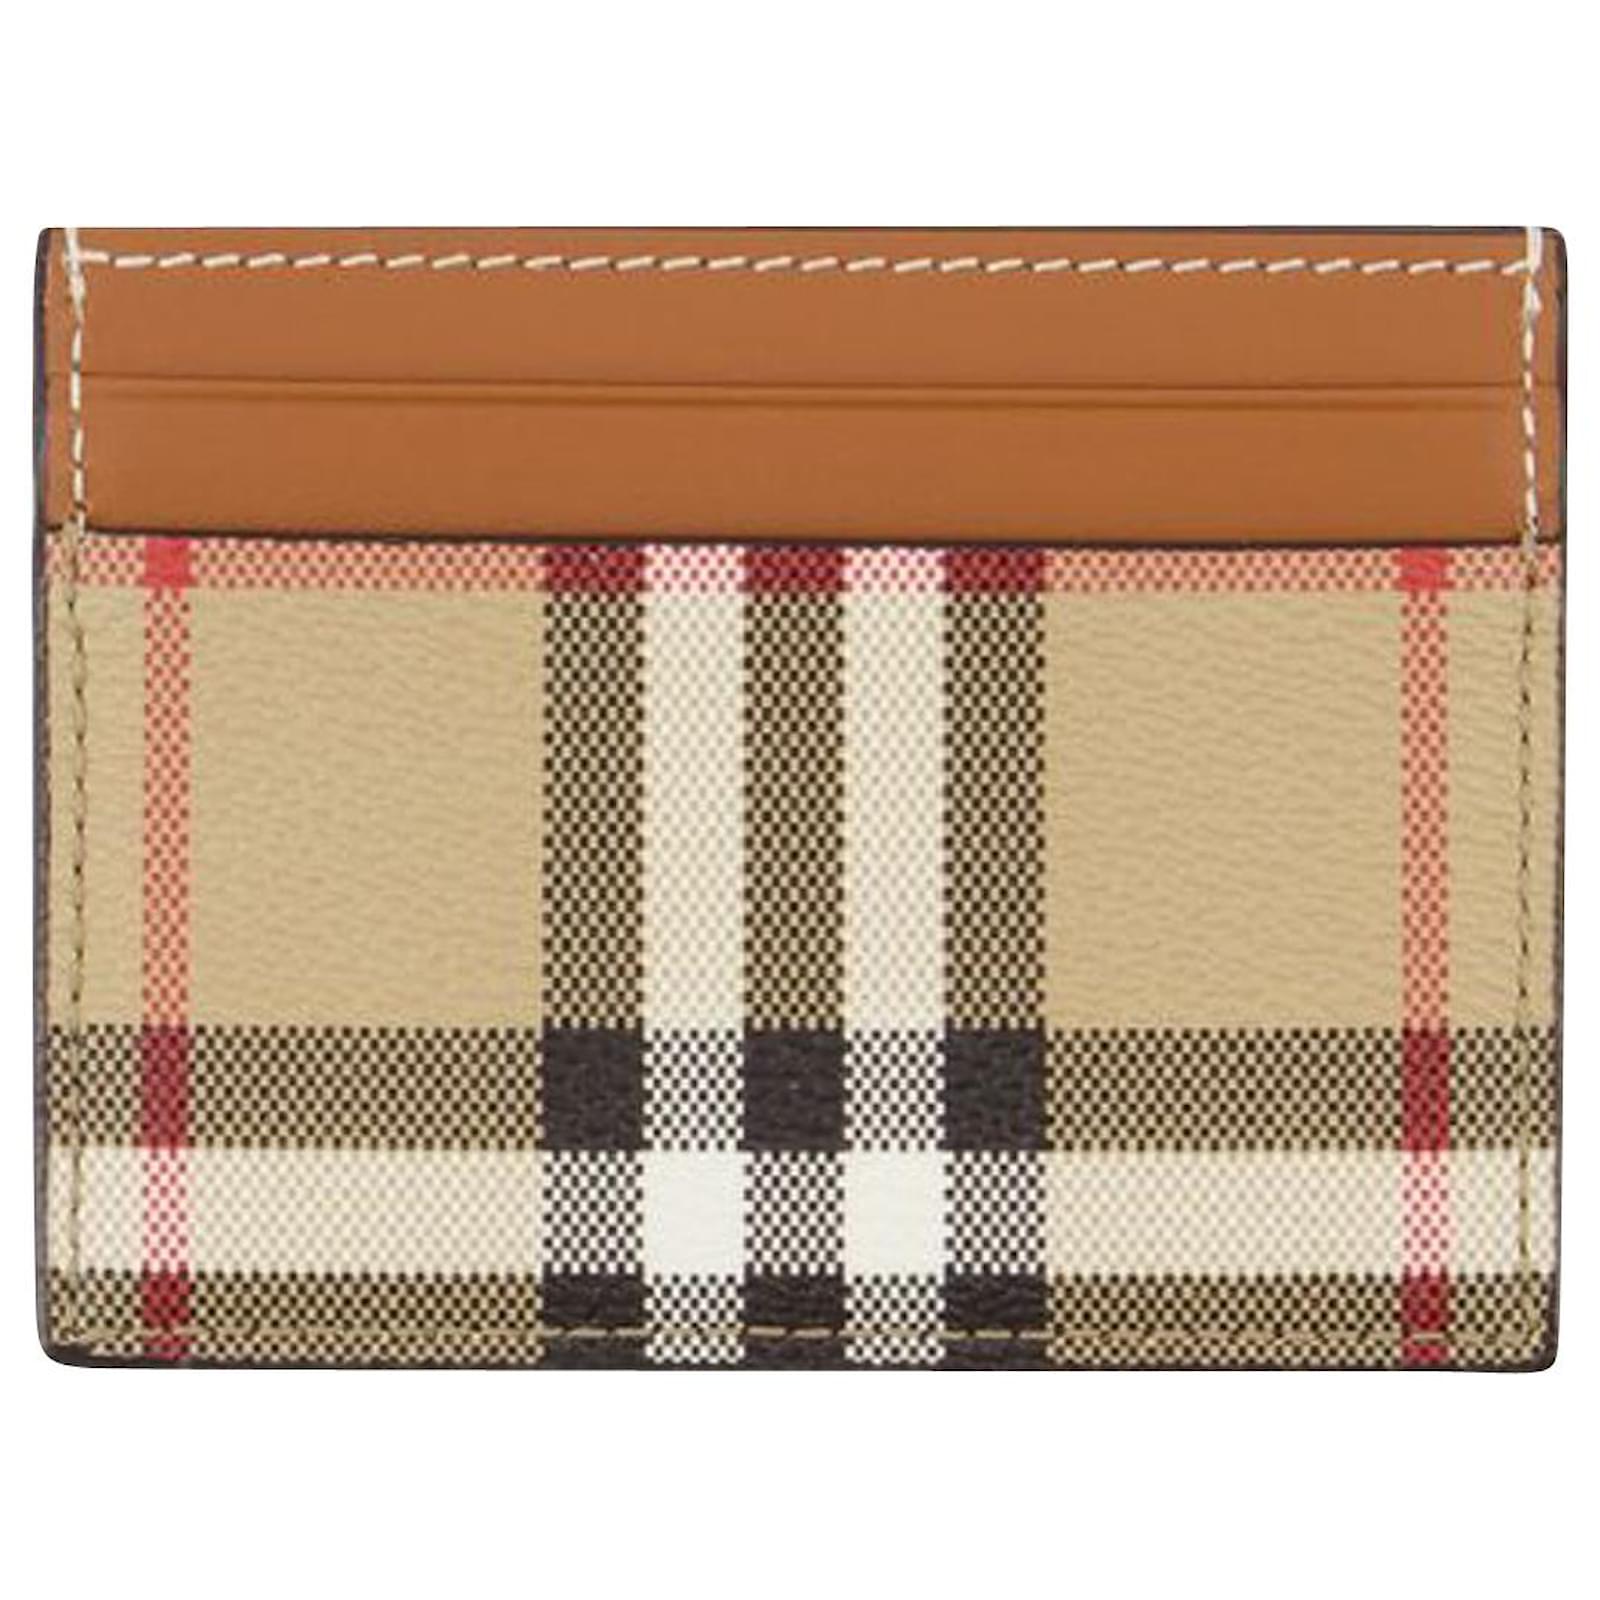 LS MN ZIP Around wallet - Burberry - Leather - Brown